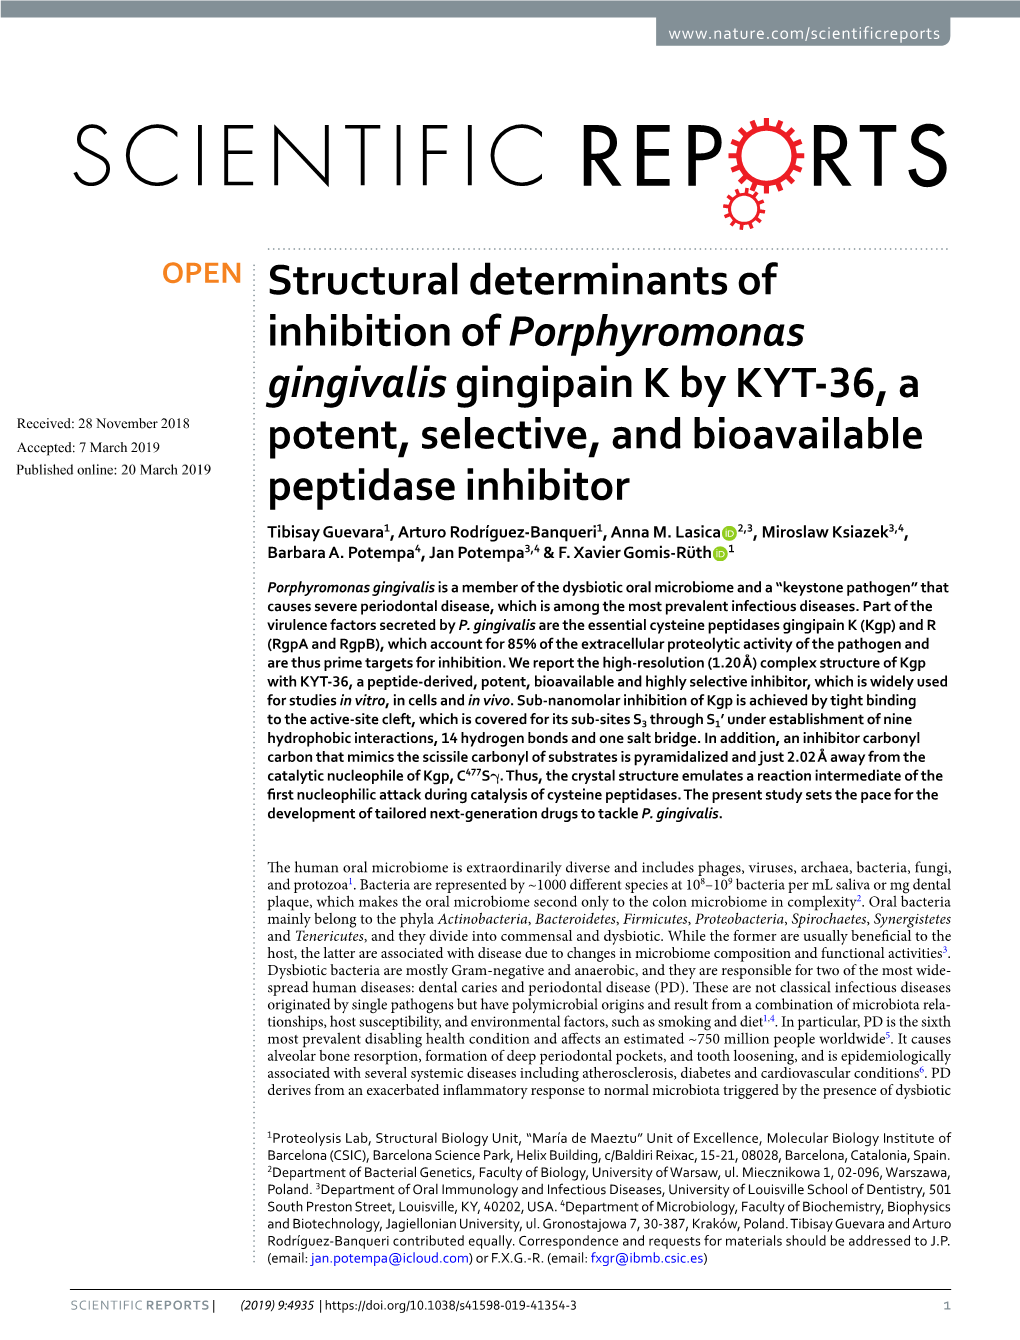 Structural Determinants of Inhibition of Porphyromonas Gingivalis